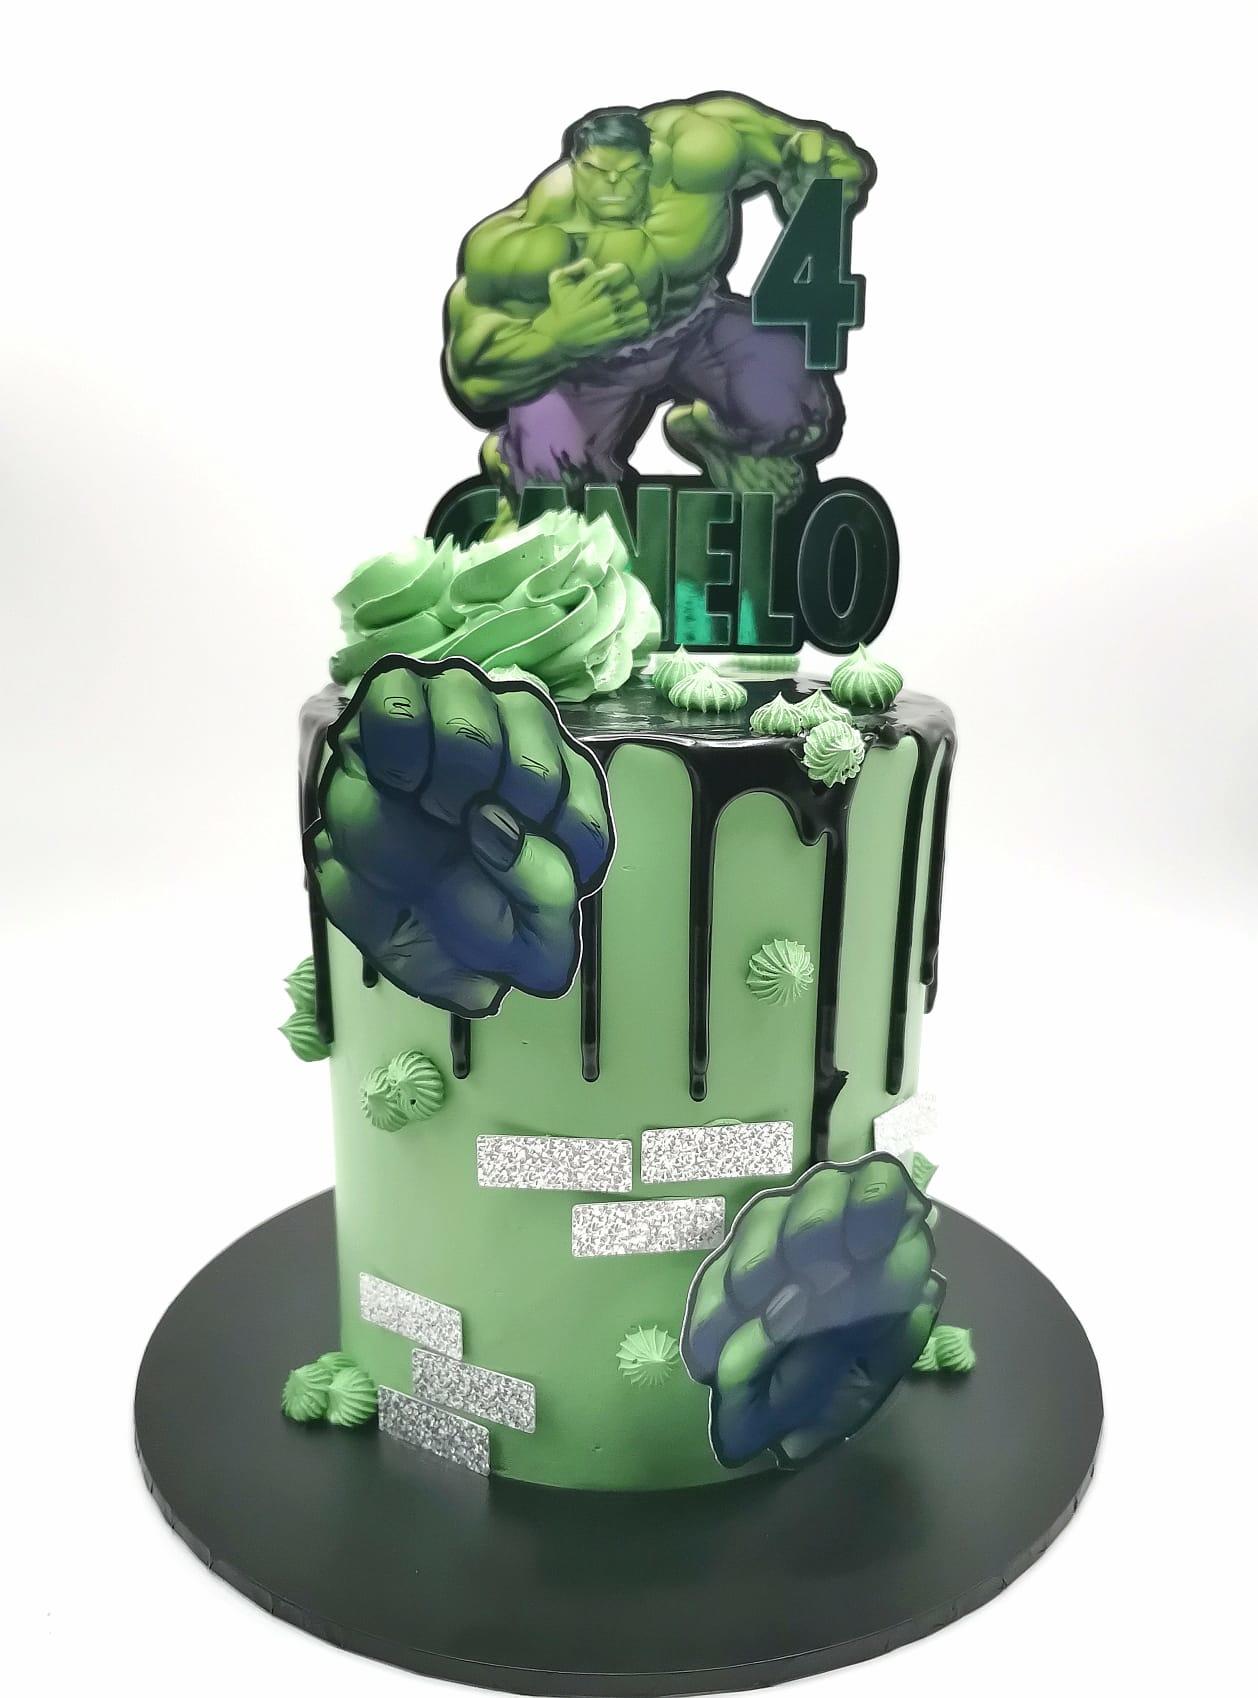 Hulk Cake | How To Make Hulk Theme Cake By Seller FactG - YouTube